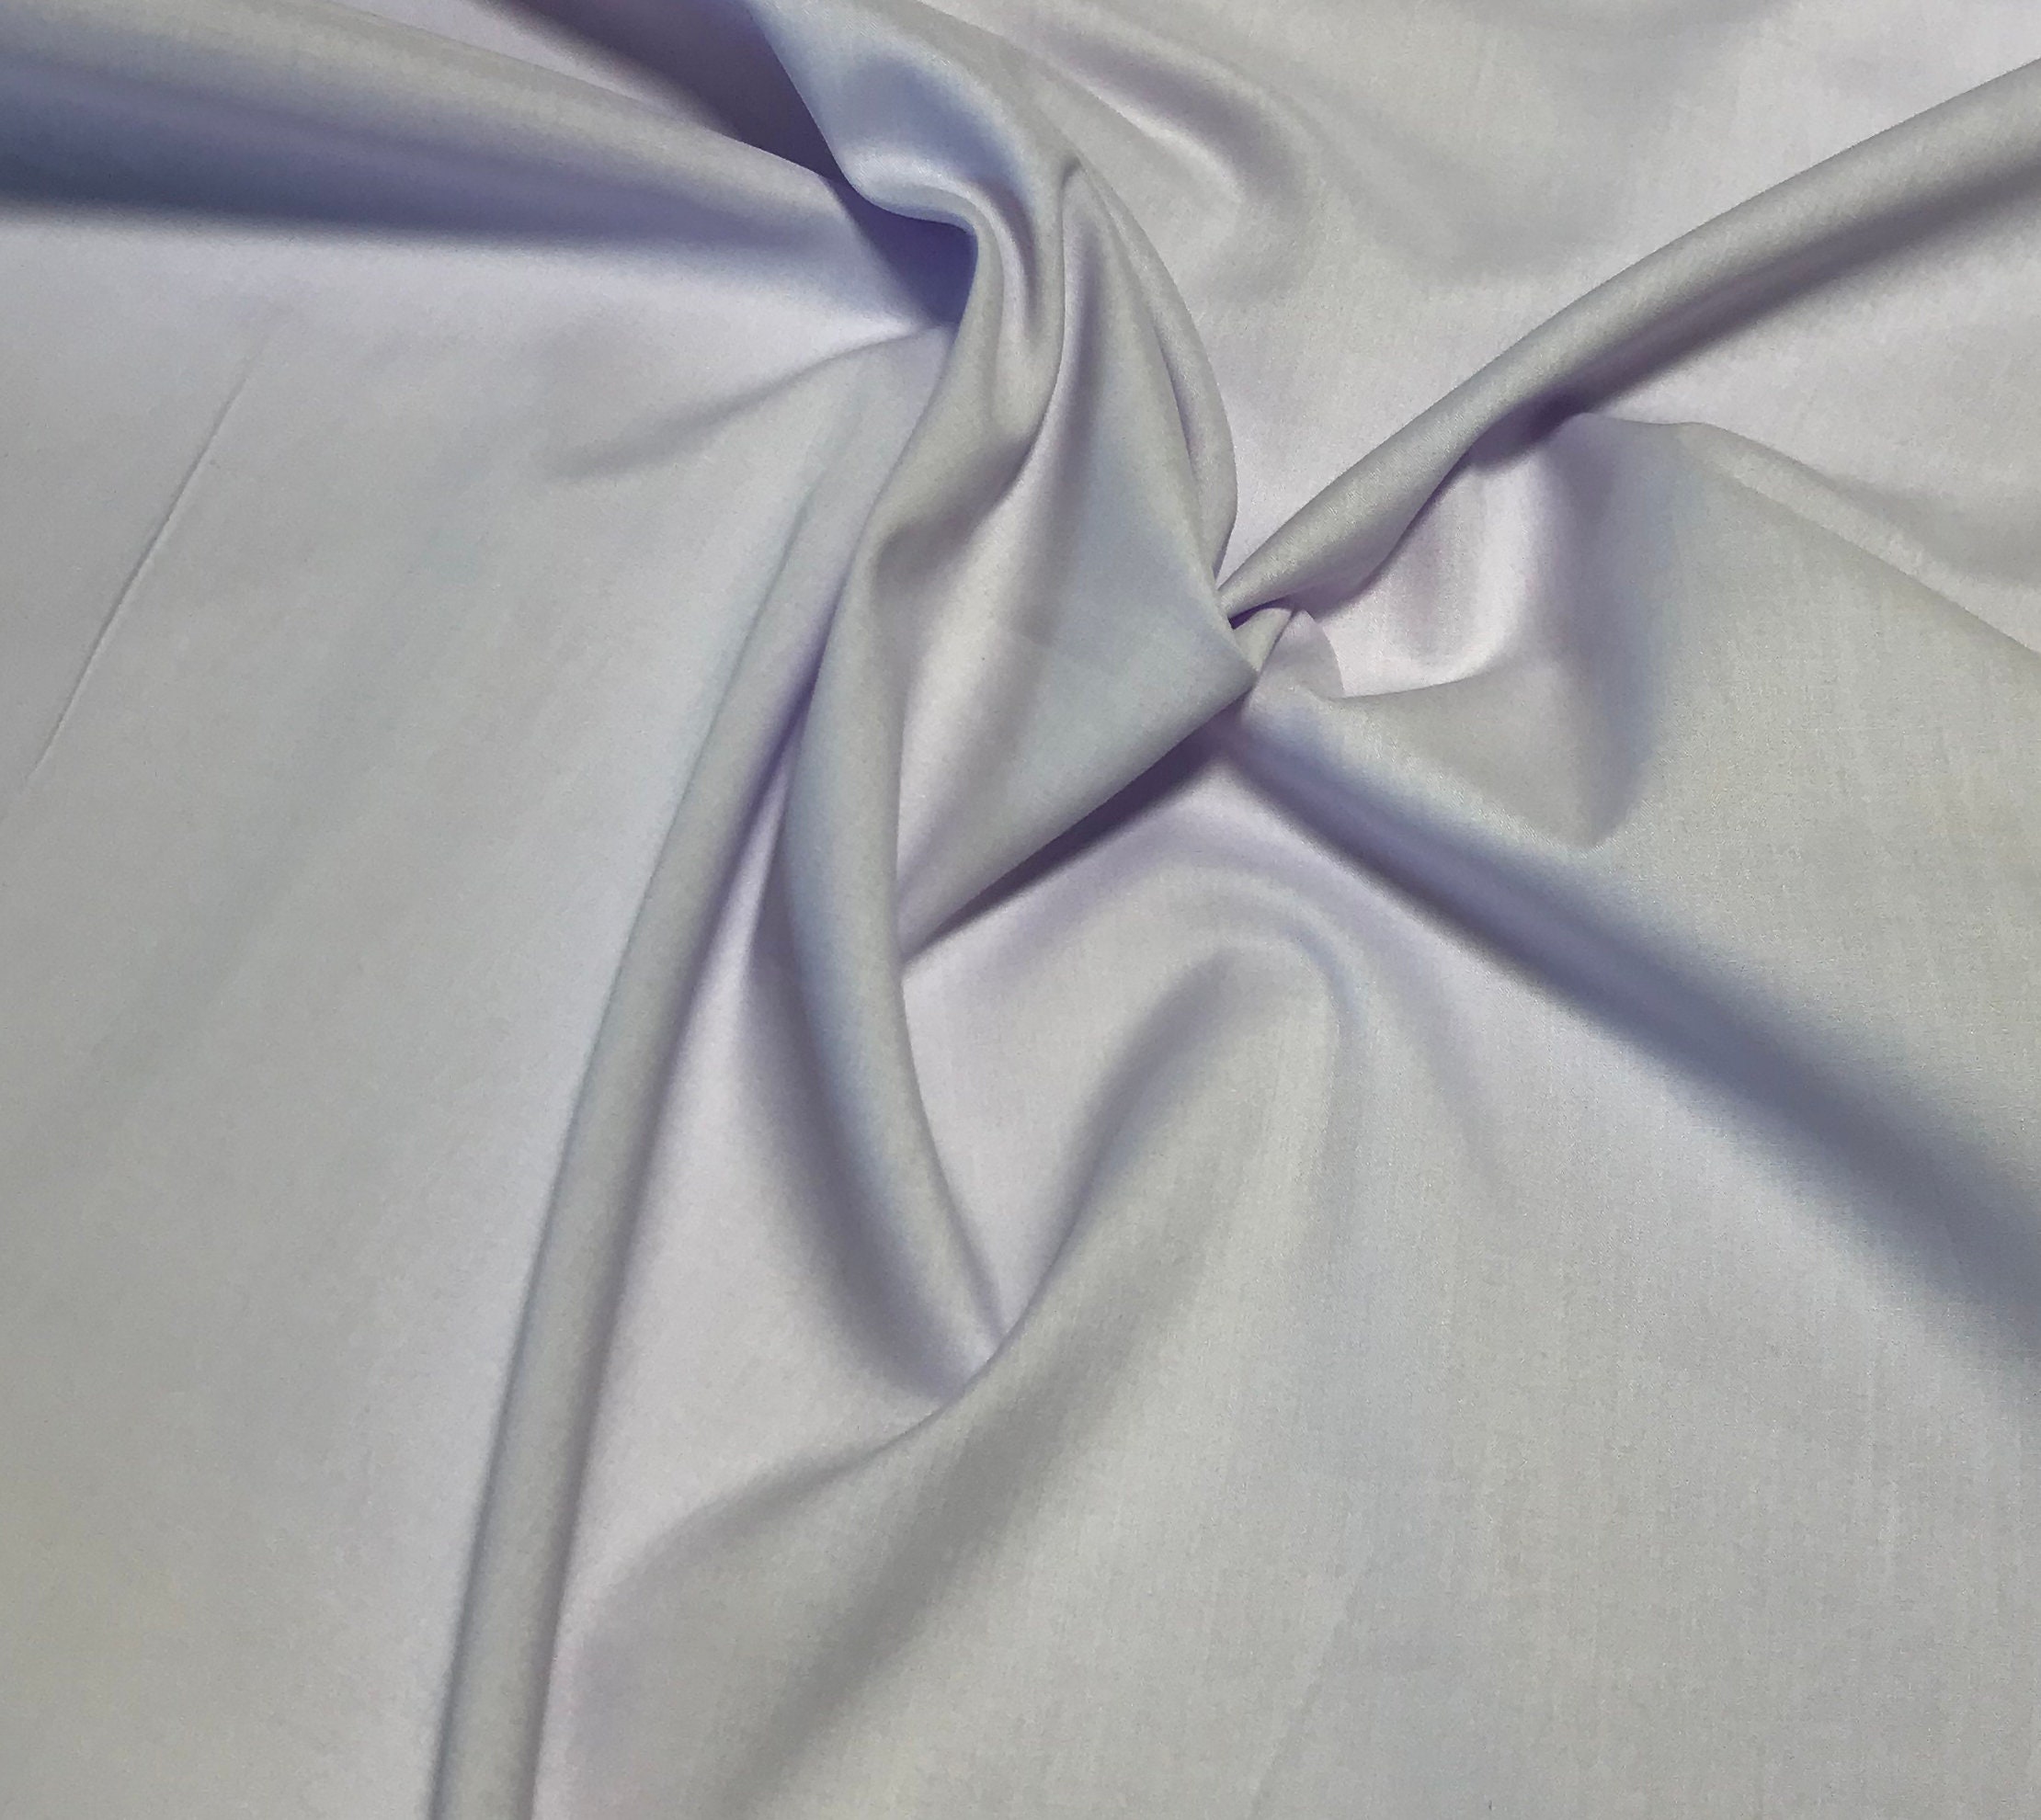 Spechler-vogel Fabric Lavender Imperial Batiste Poly/cotton Fabric -  UK